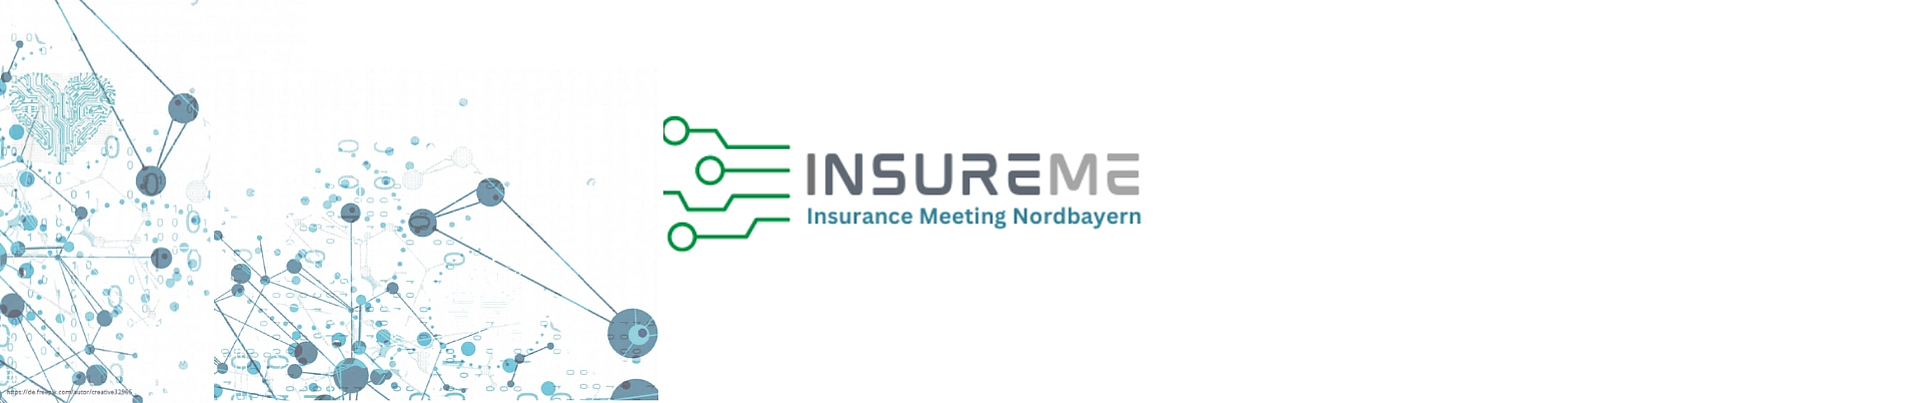 InsureMe - Insurance Meeting Nordbayern